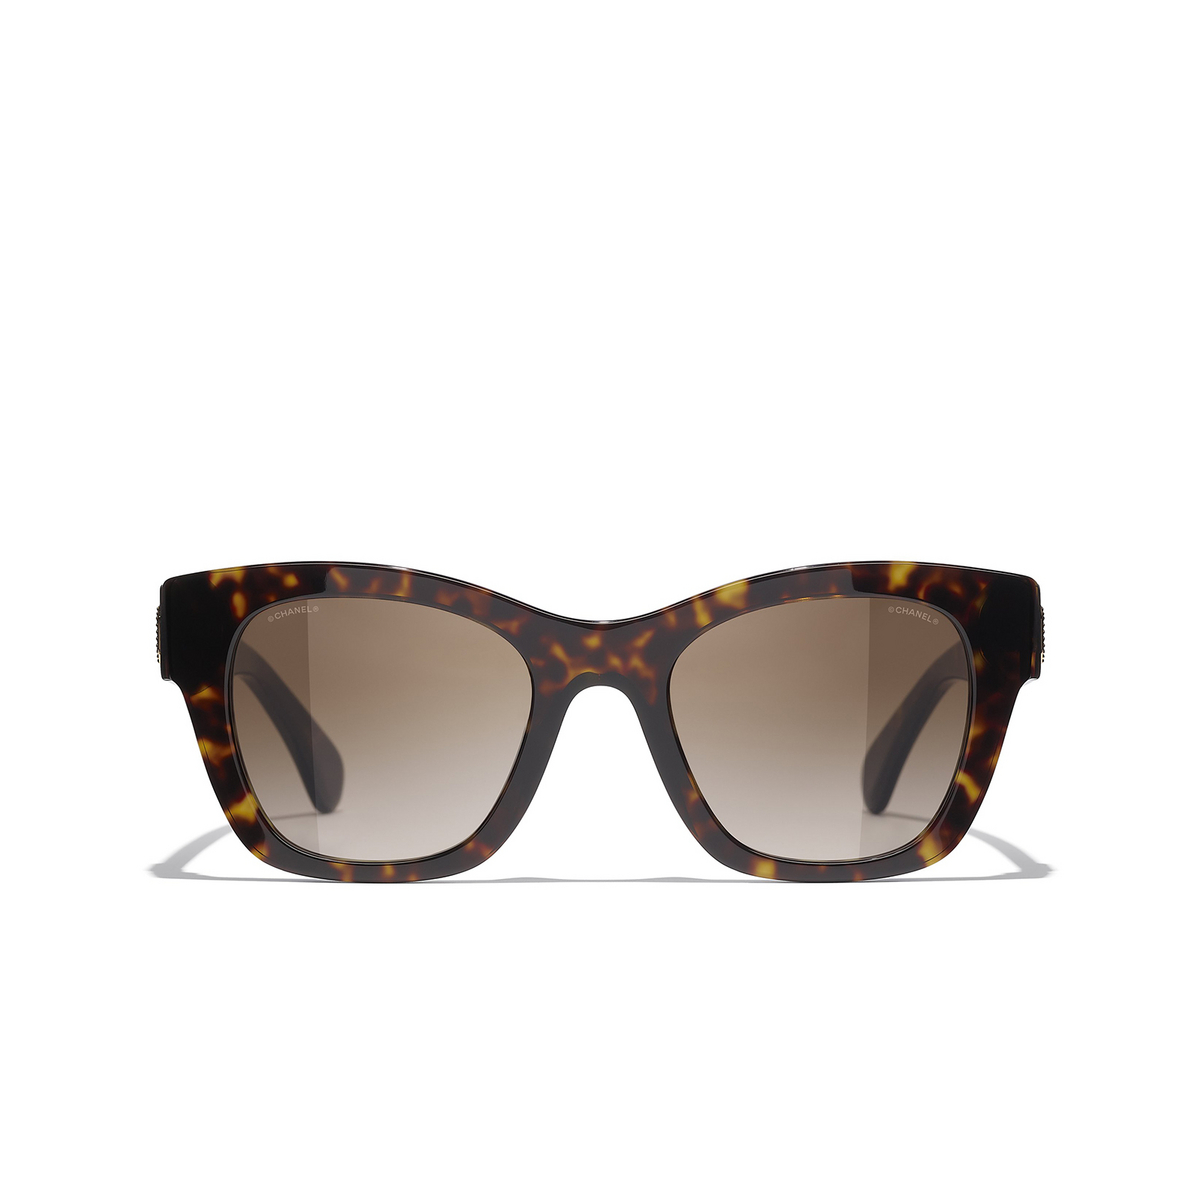 CHANEL square Sunglasses C714S5 Dark Tortoise - front view